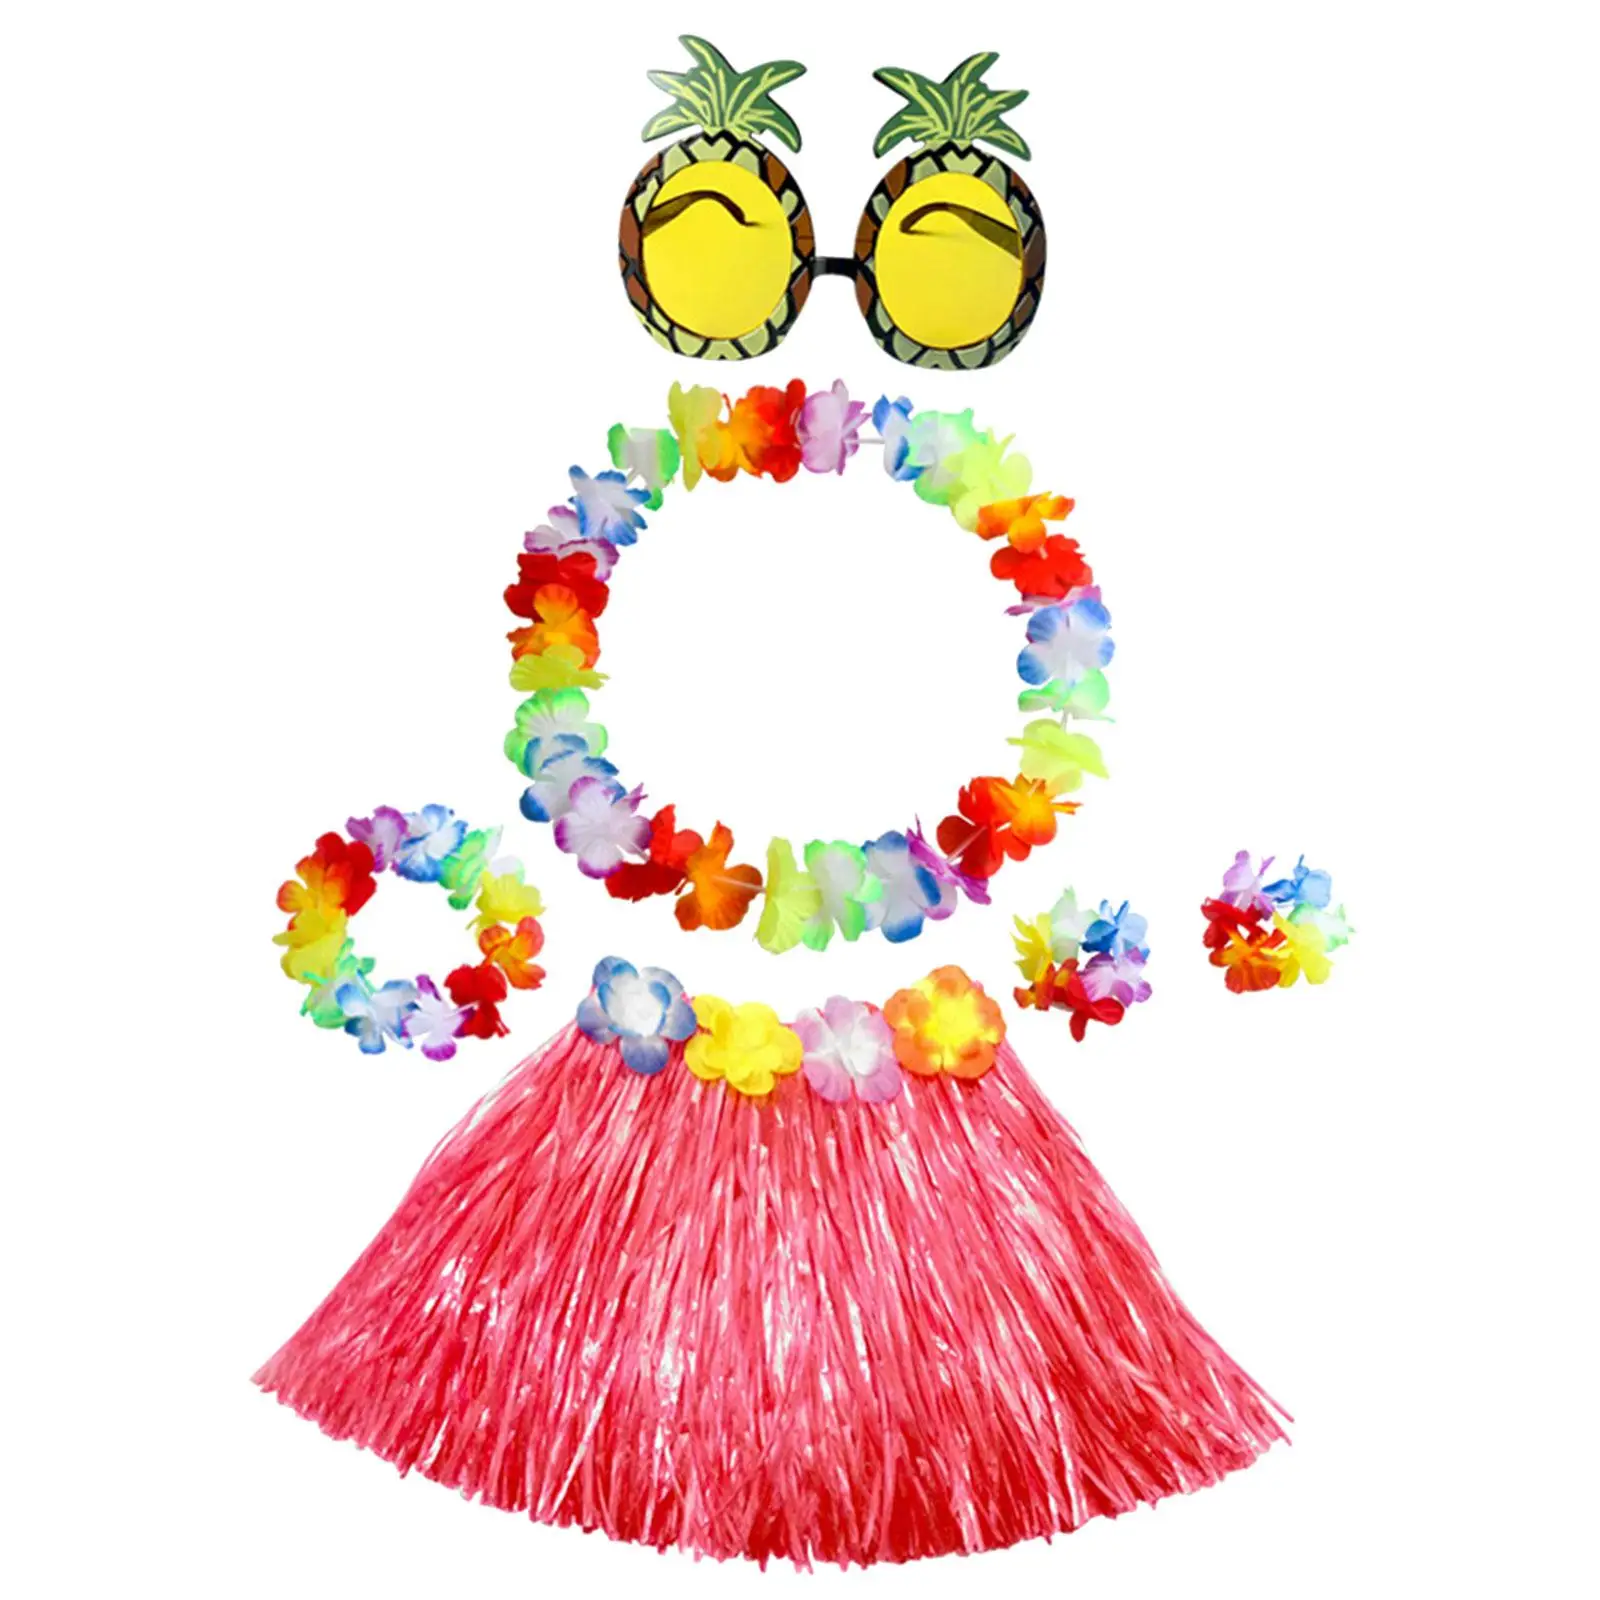 Hawaiian Grass Skirt 30cm Short Skirt Pineapple Glasses for Hawaiian Birthday